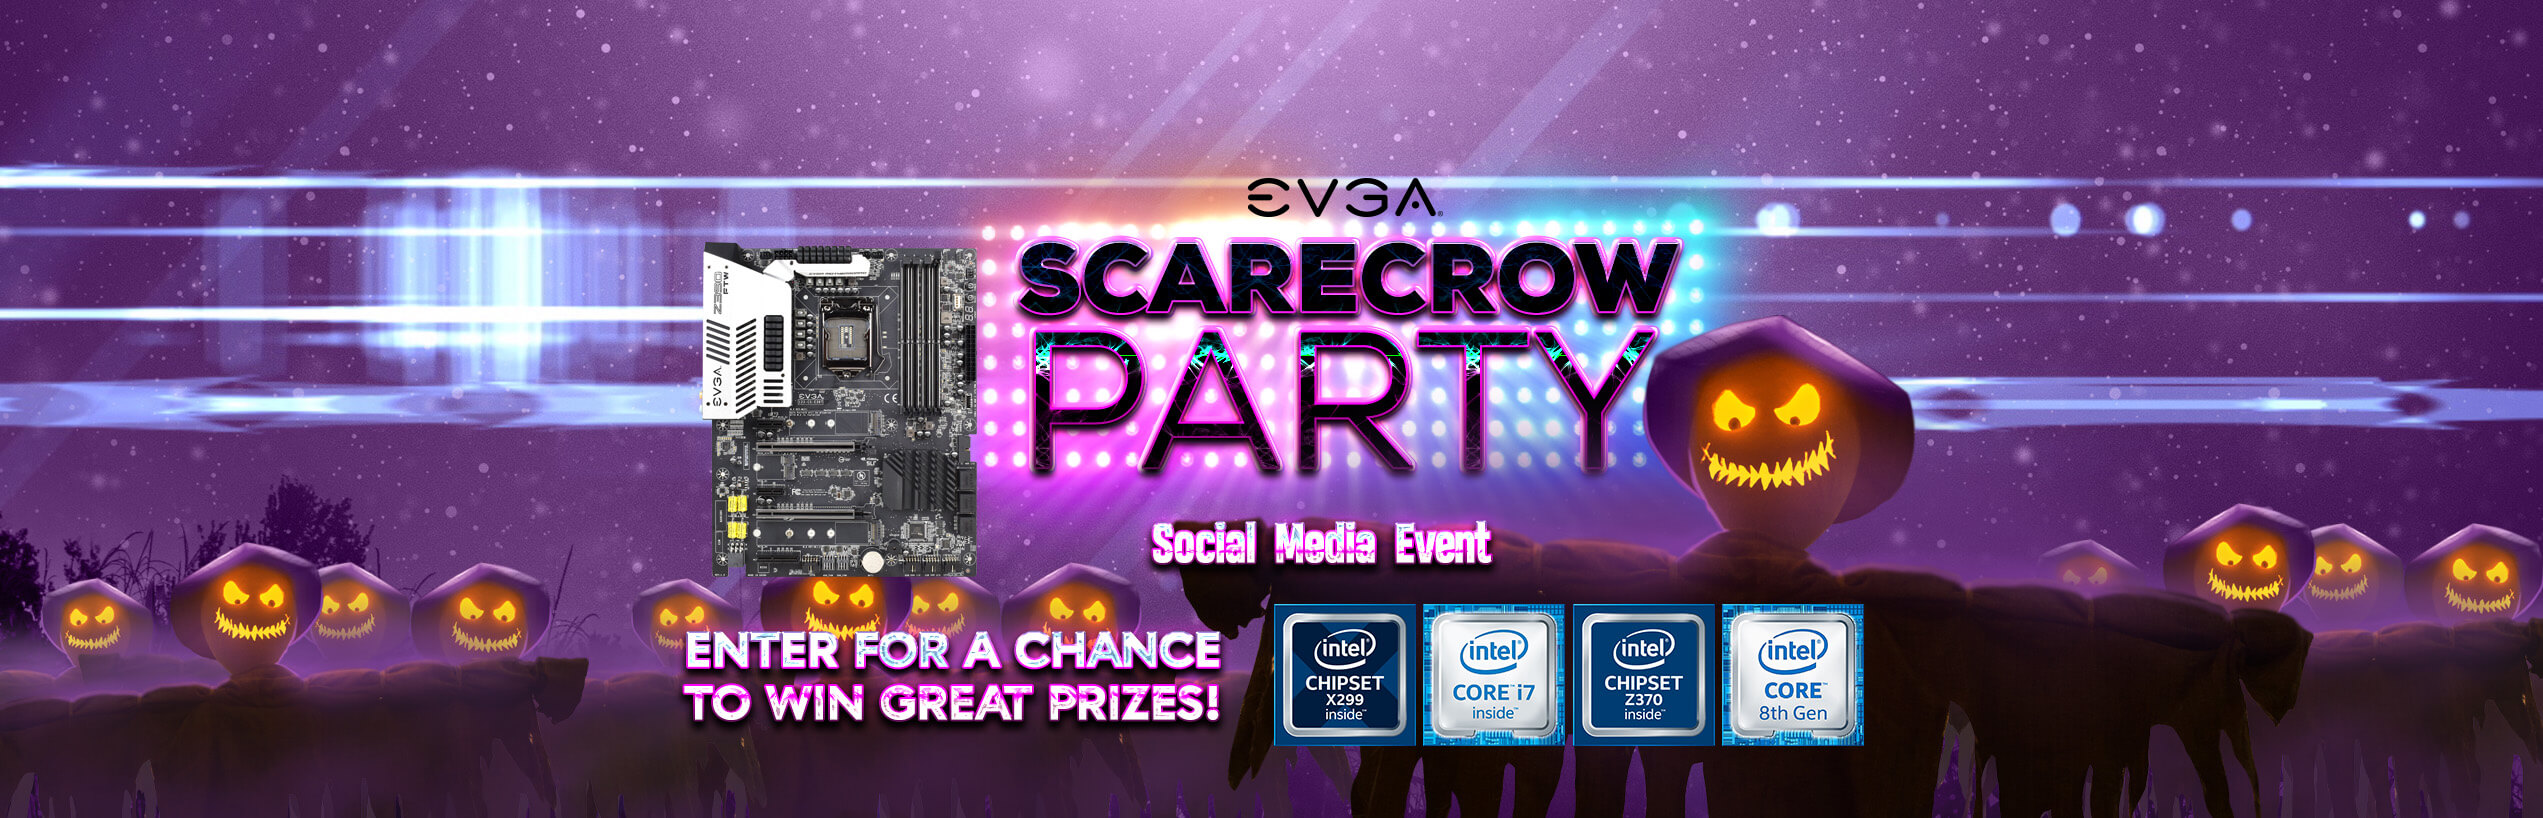 Scarecrow Party Social Media Event